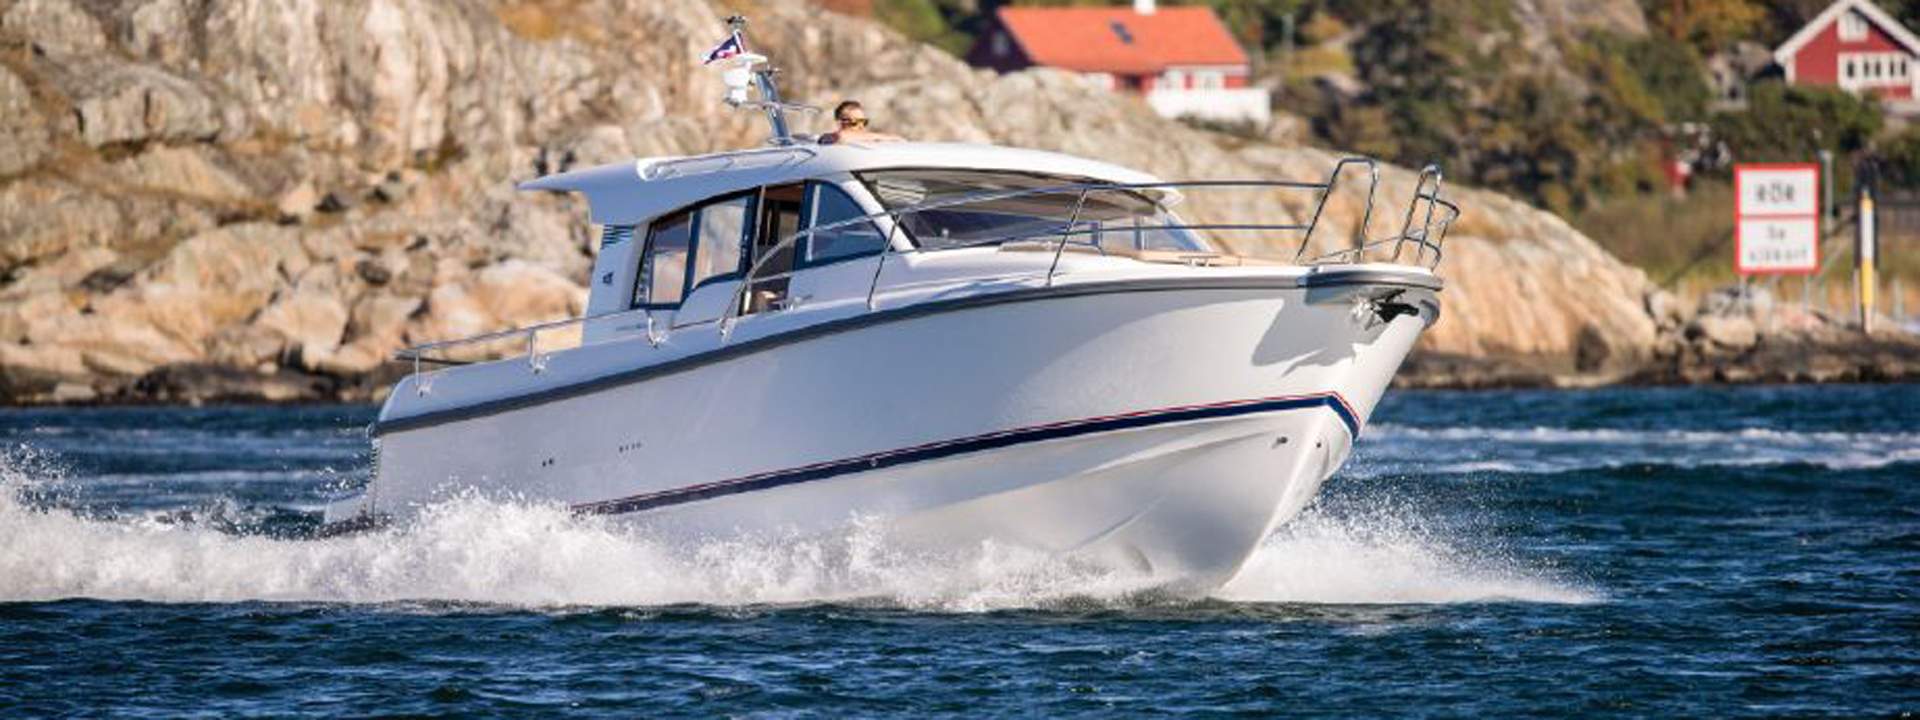 Motor boat Nimbus 365 coupe